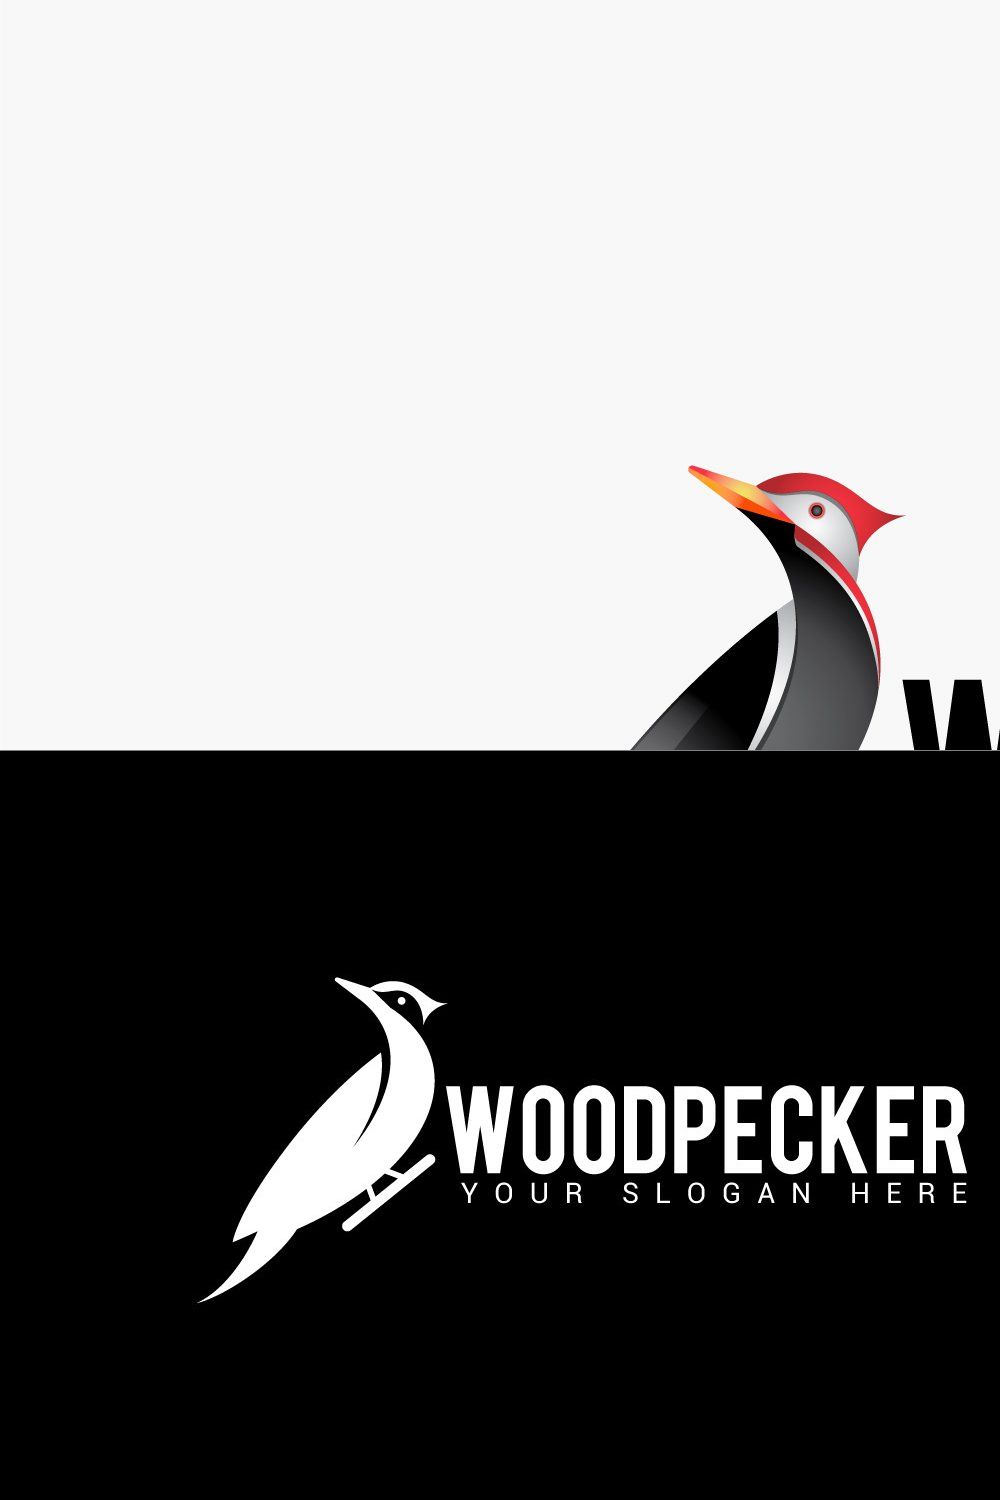 woodpecker logo pinterest preview image.